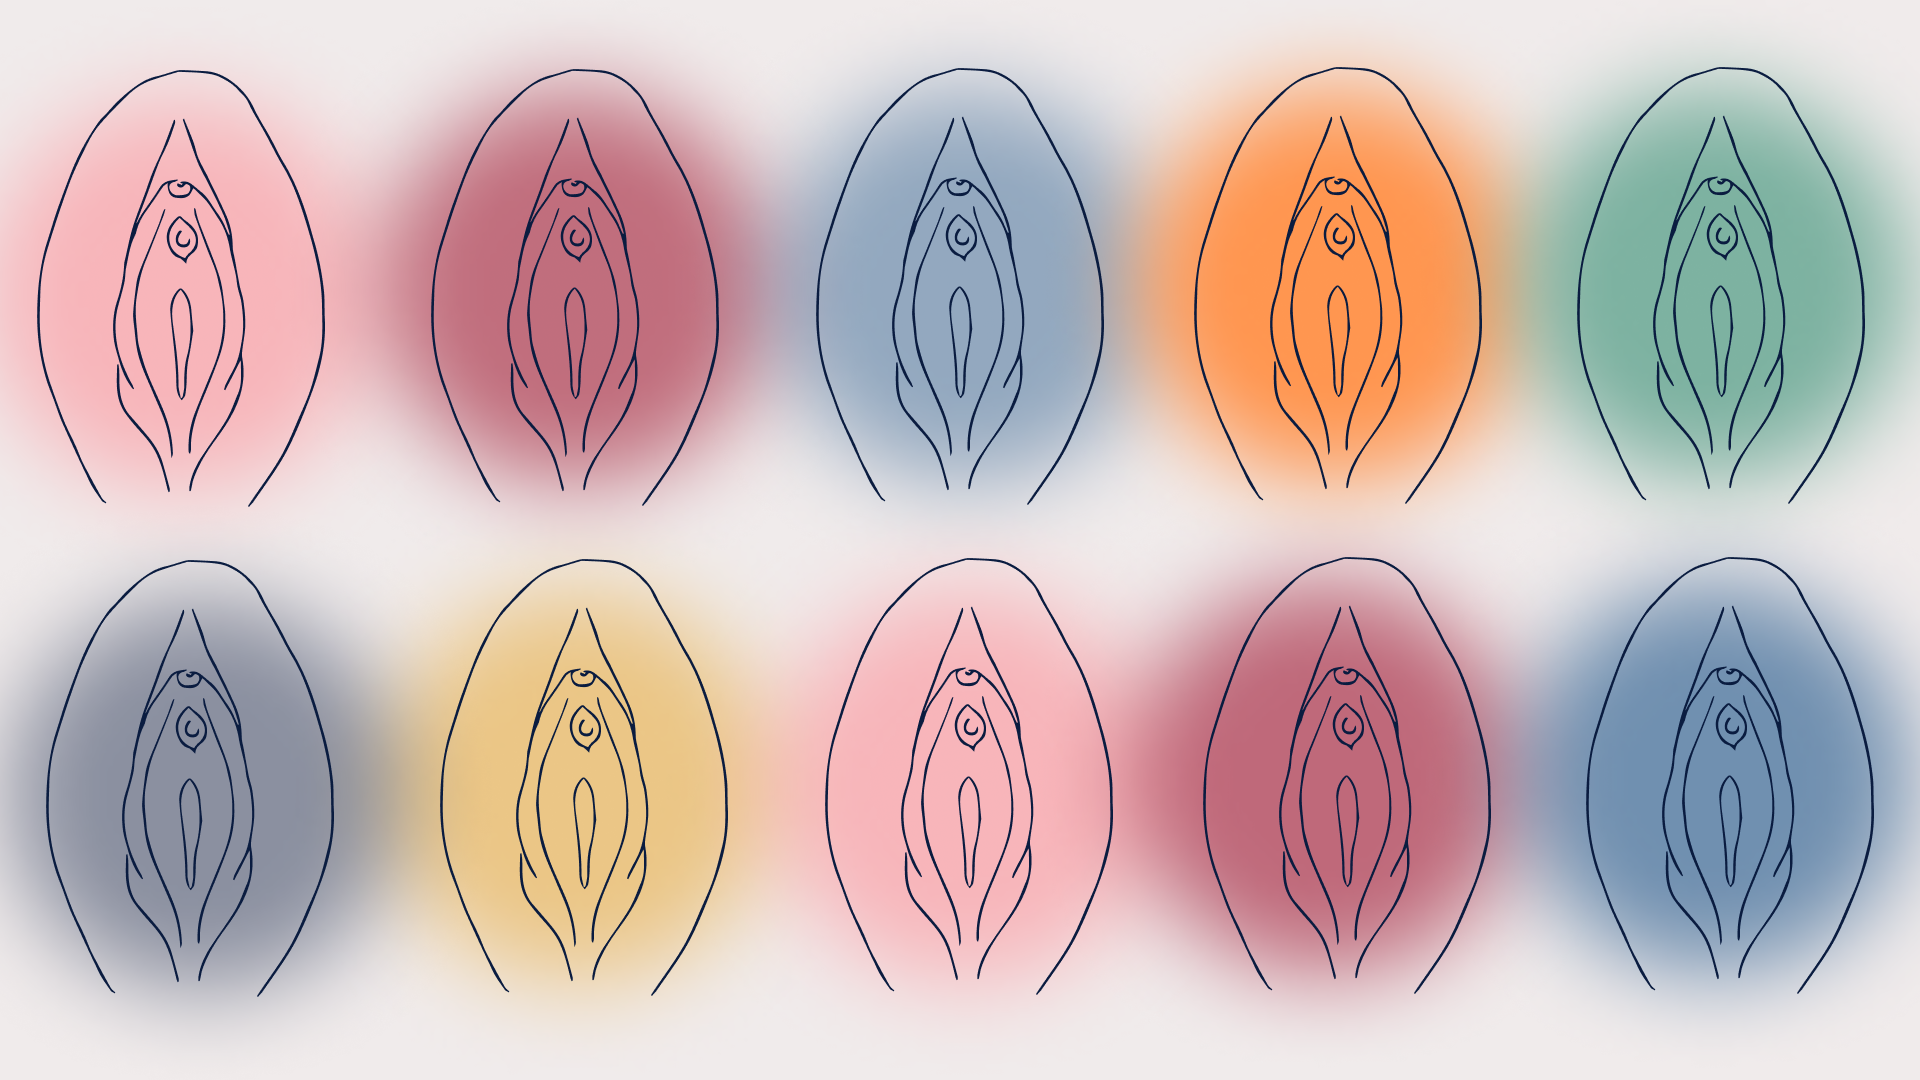 The anatomy of a vulva